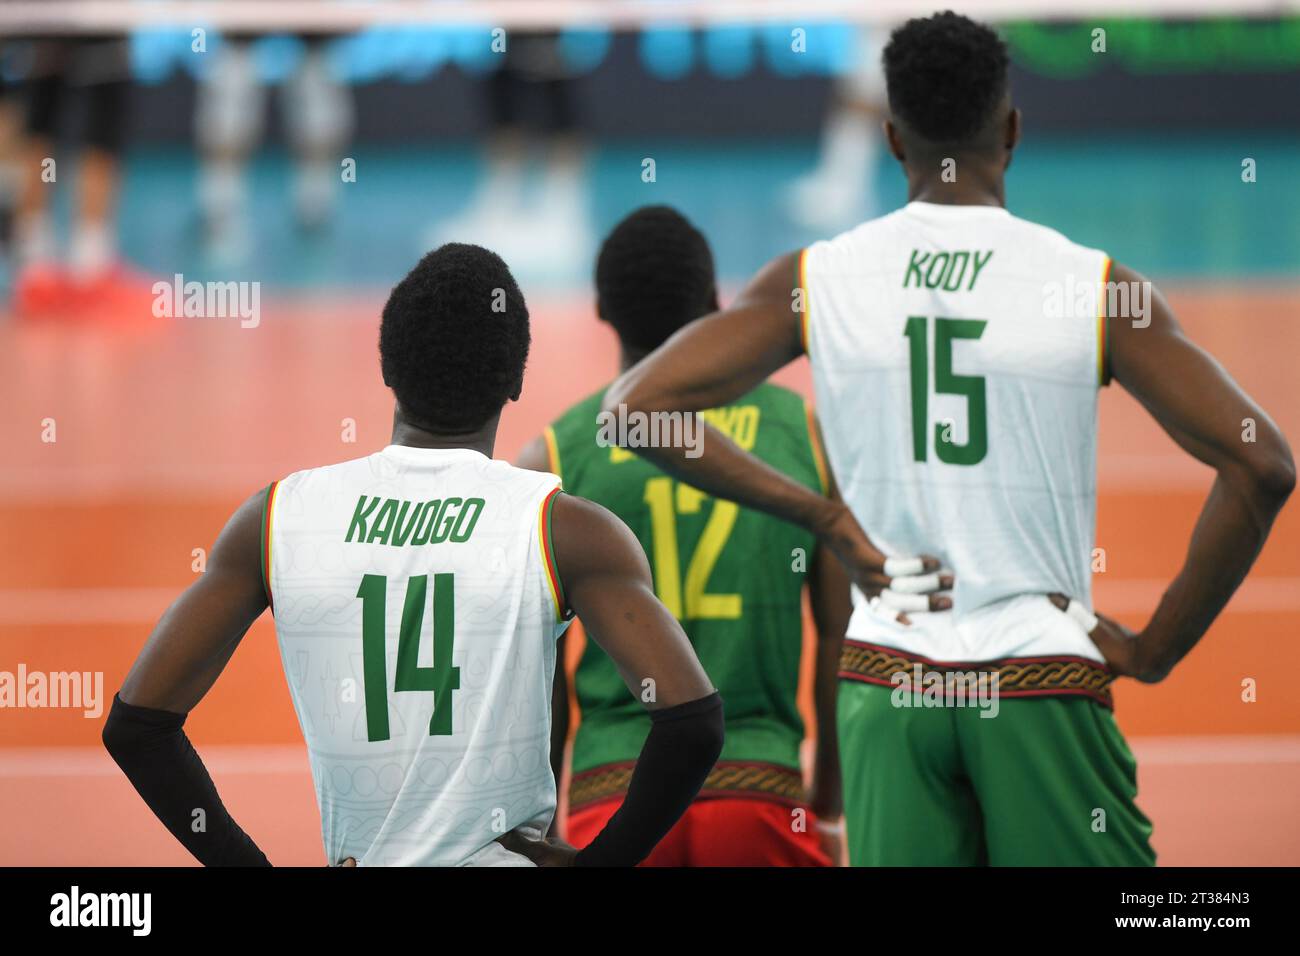 Yvan-Arthur Kody, Yaoussia Kavogo, Kevin Bassoko (Cameroon). Volleyball World Championship 2022. Stock Photo